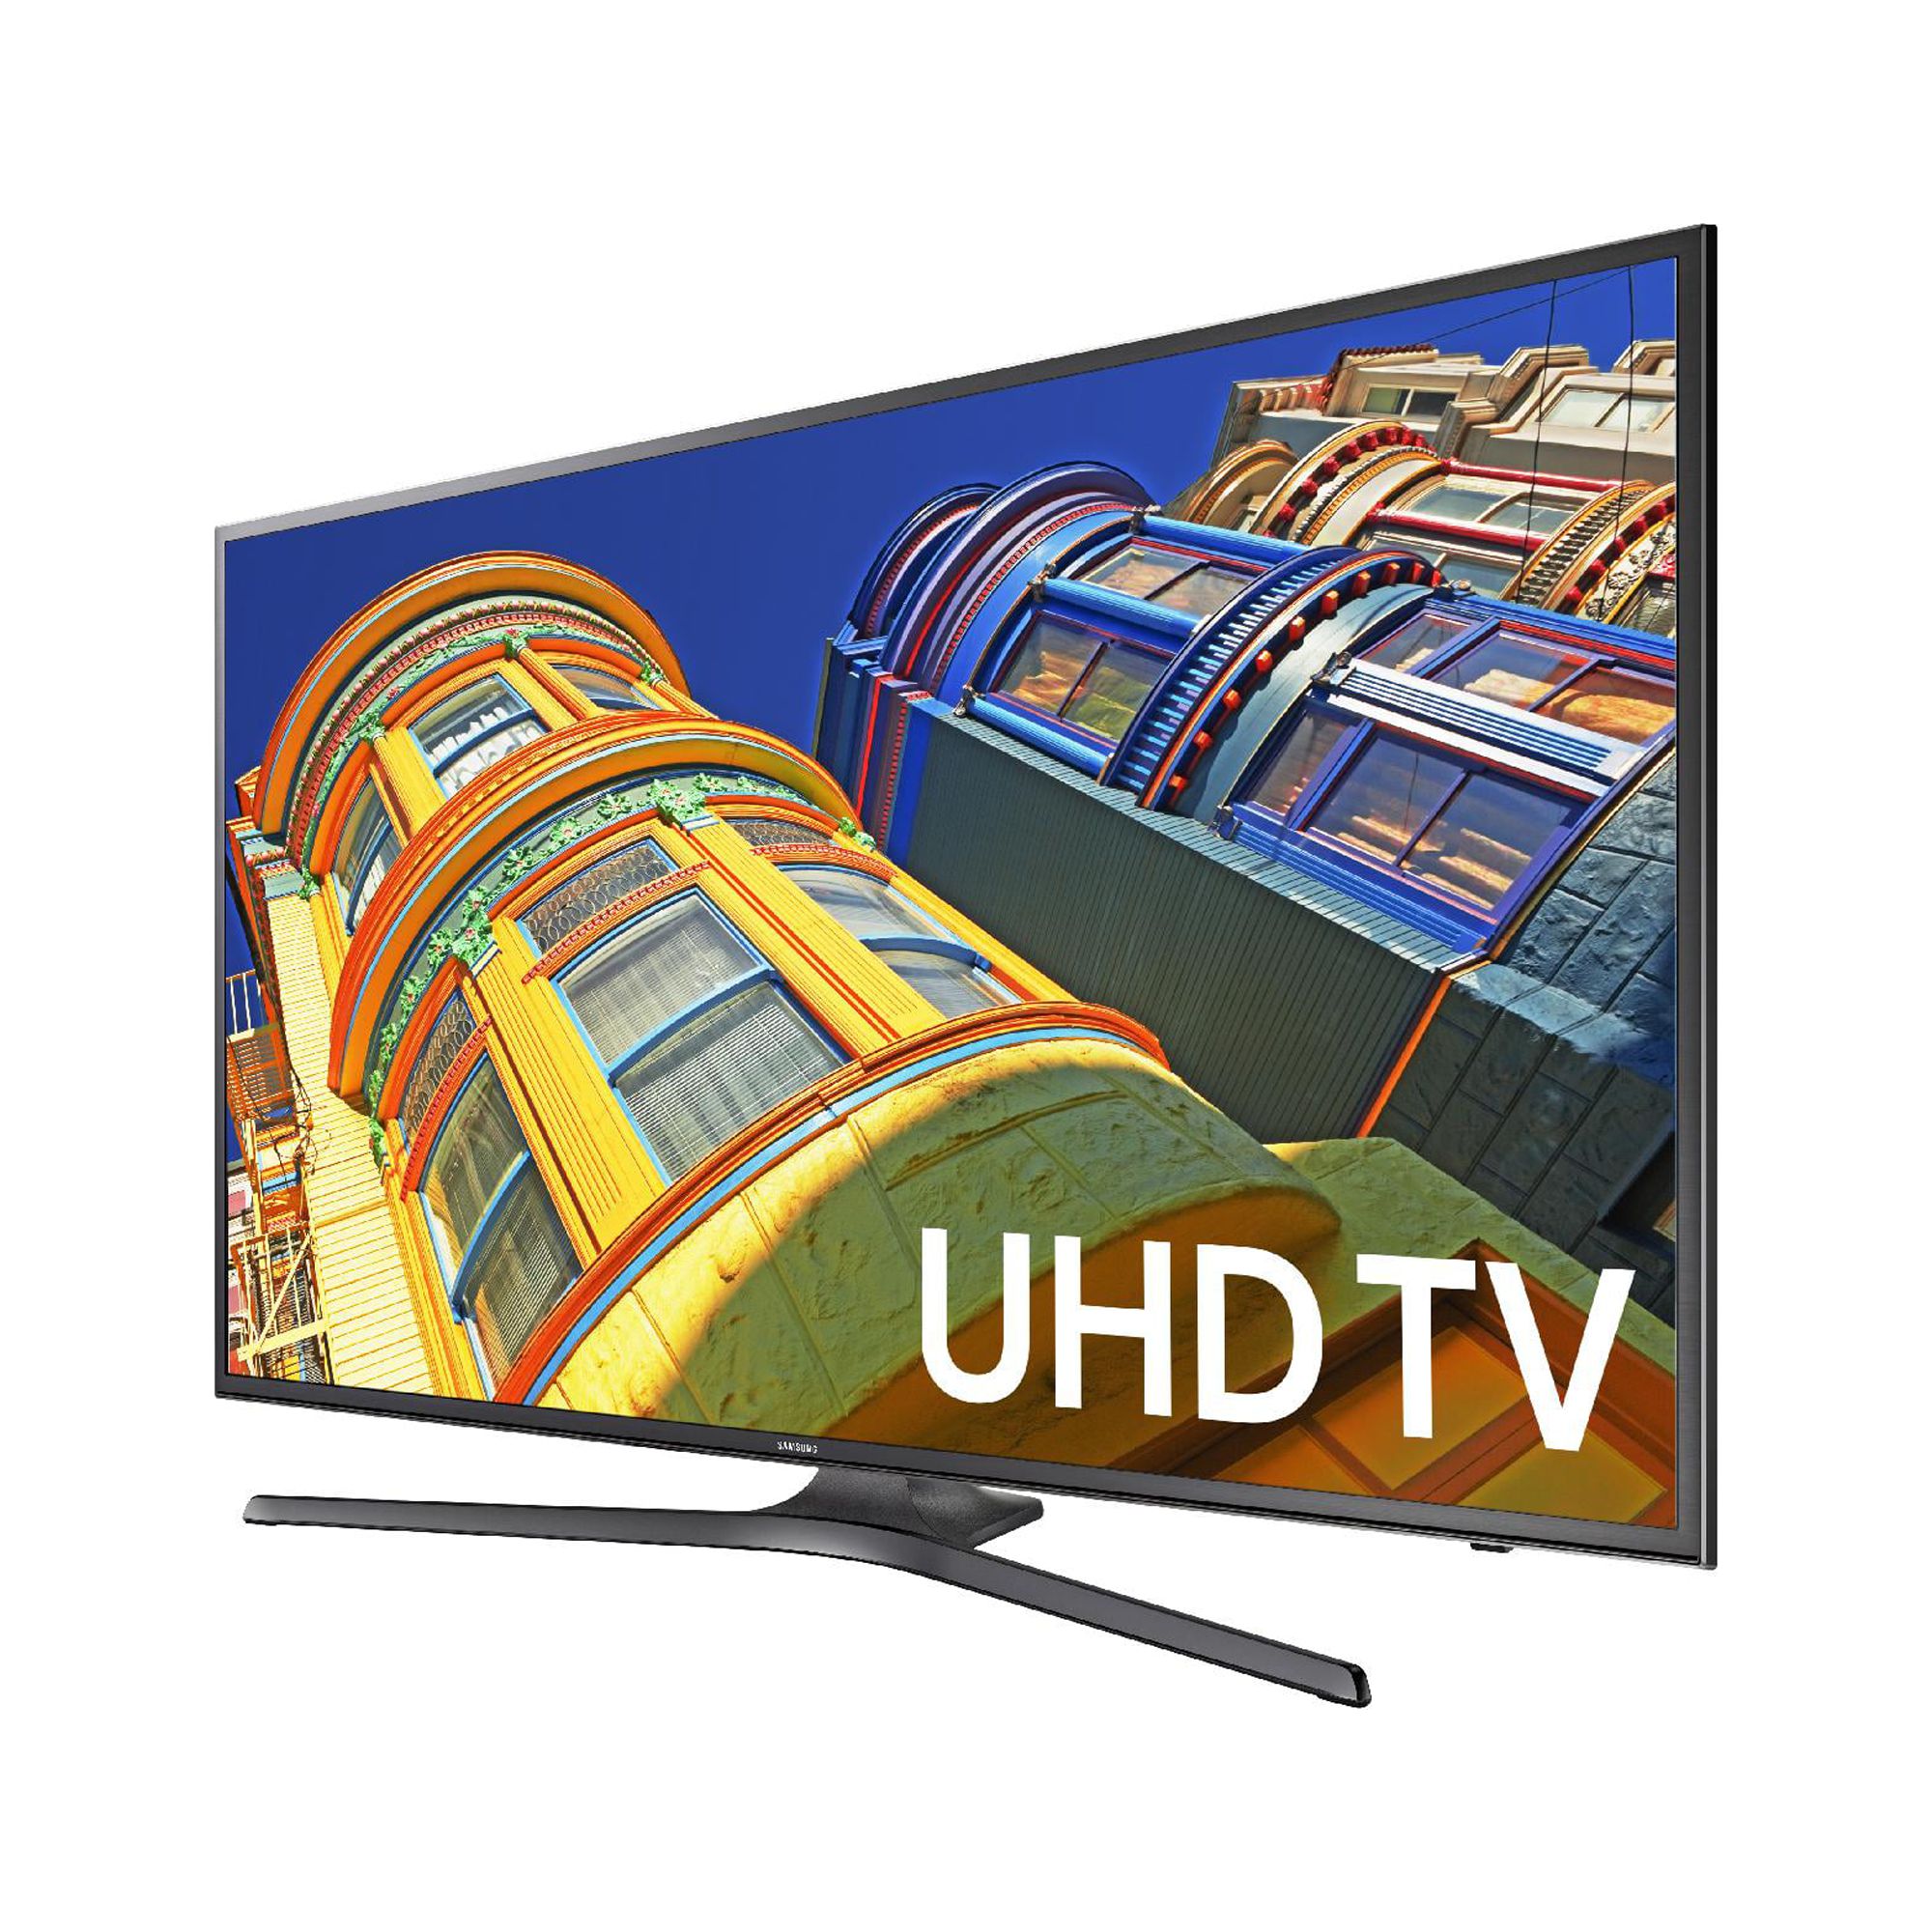 Samsung 55-inch 4k ultra hd smart led tv w/ wifi, 2016 model - un55ku6300 - image 5 of 7